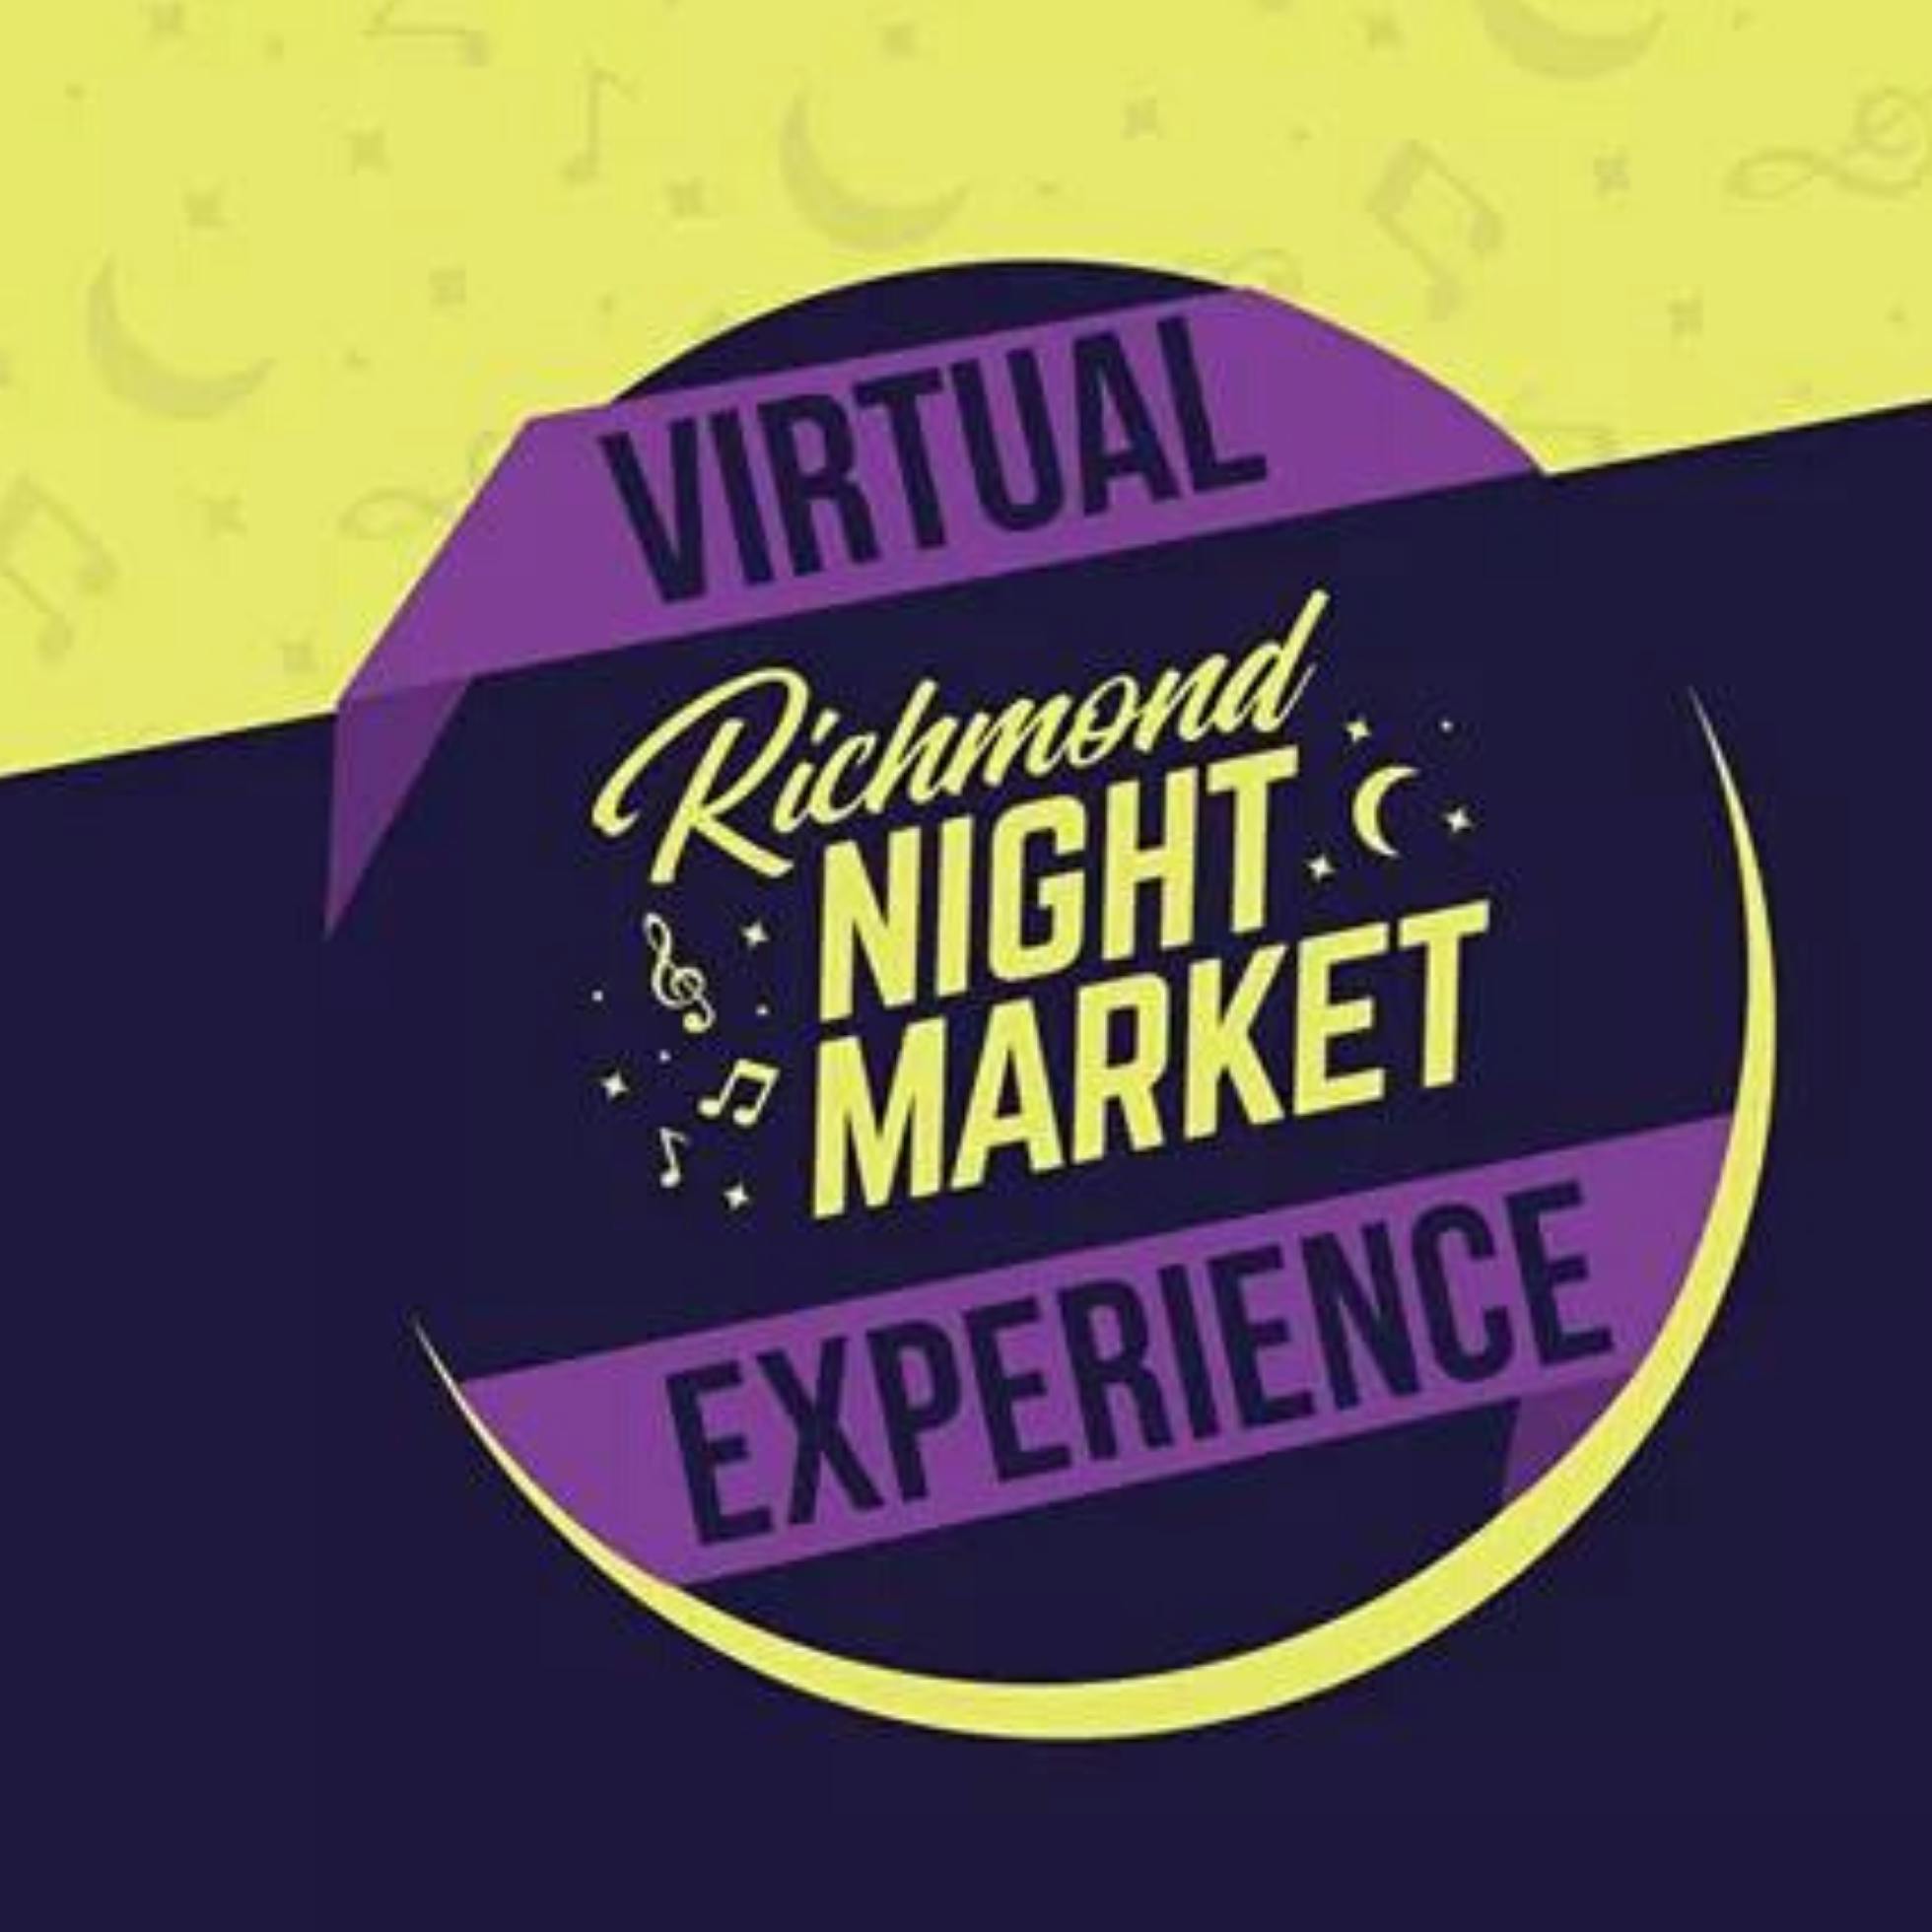 Virtual Richmond Night Market